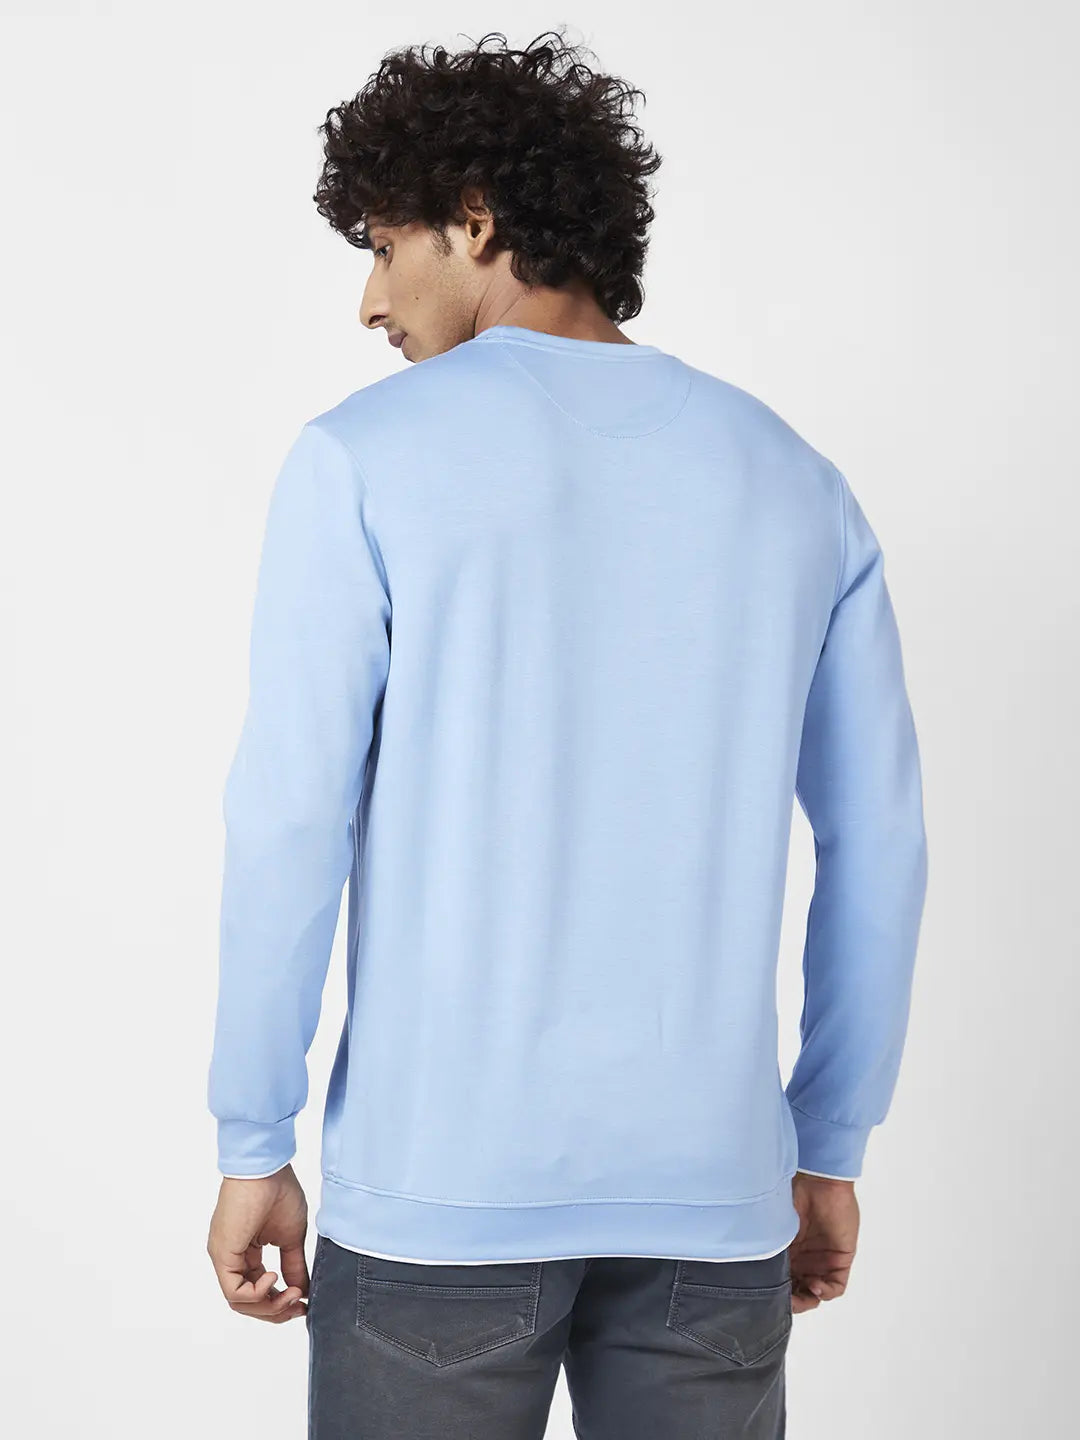 Spykar Men Powder Blue Blended Slim Fit Full Sleeve Round Neck Printed Casual Sweatshirt